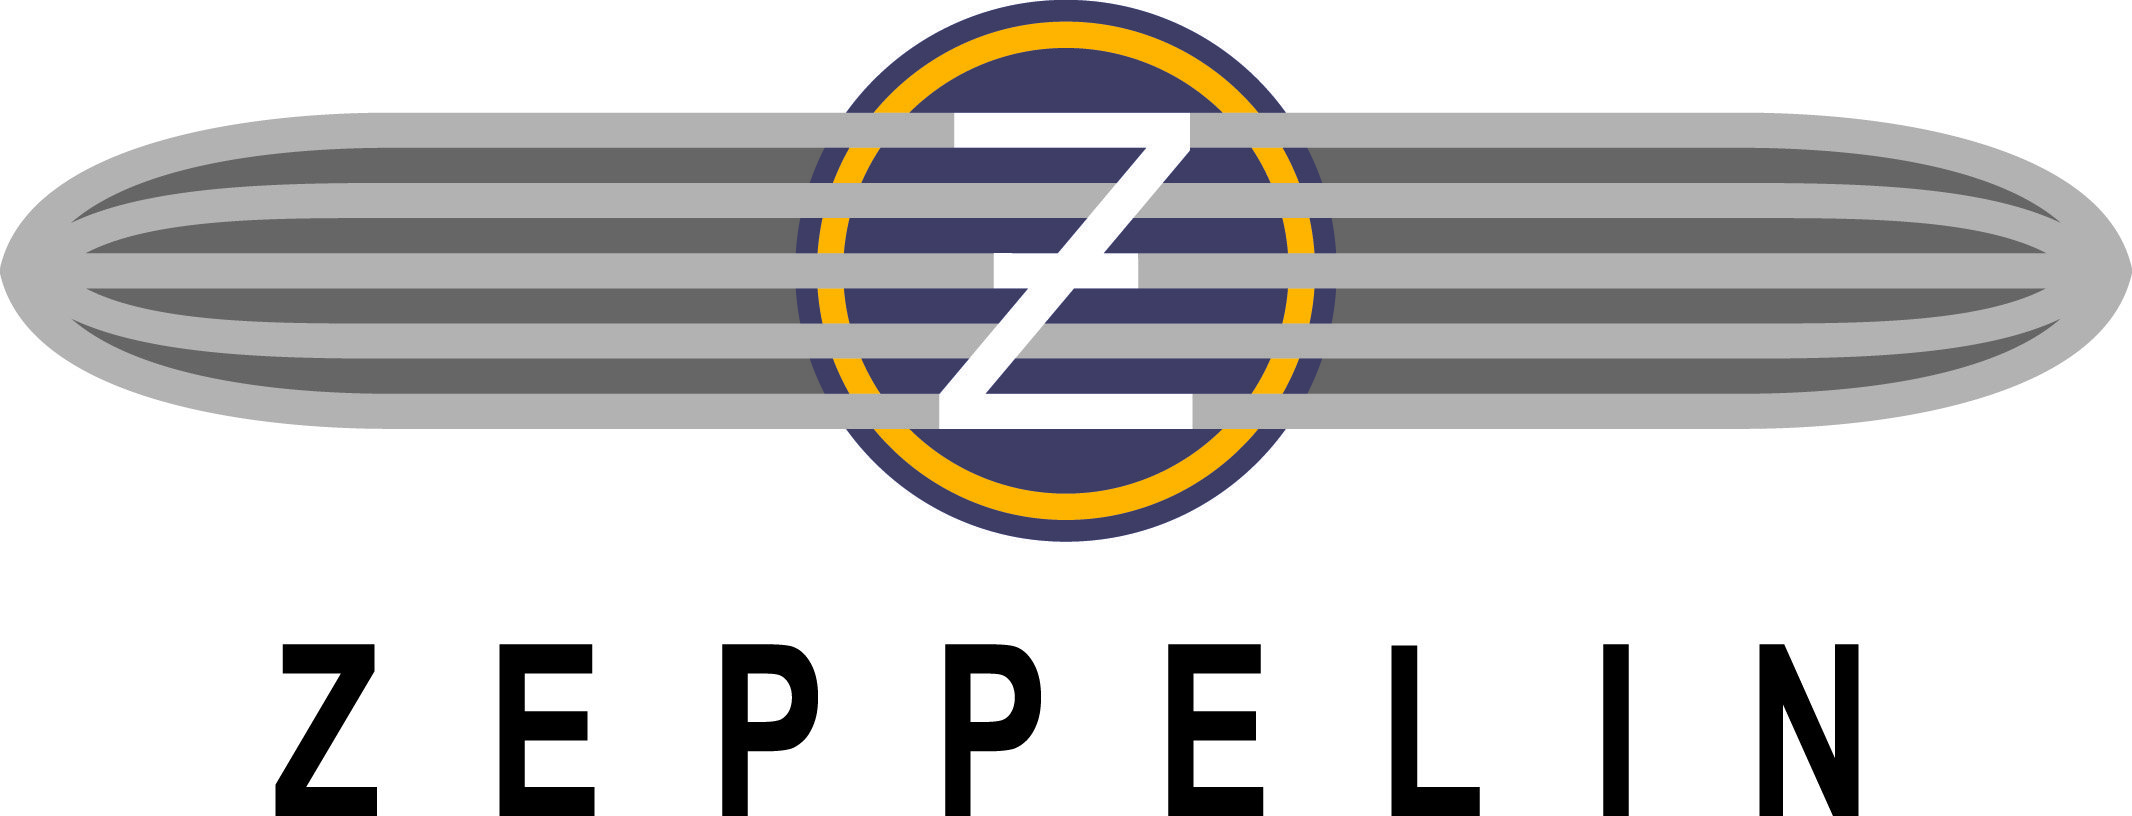 zeppelin-1-logo-1.jpg